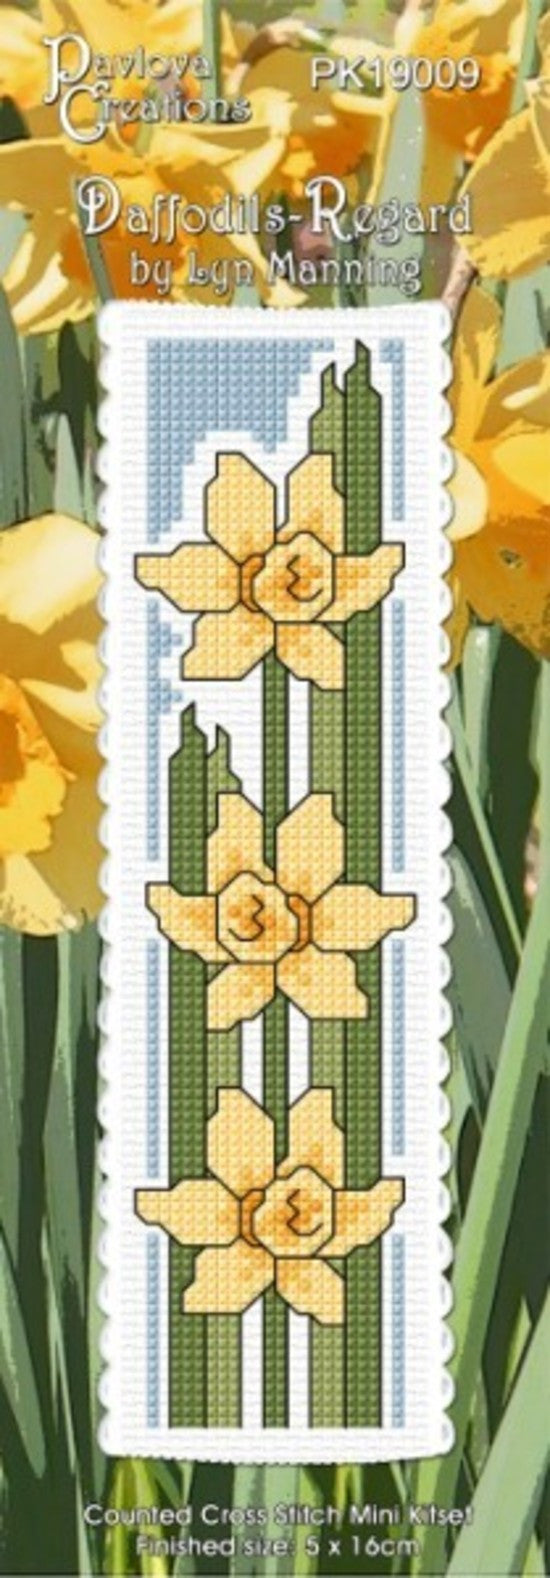 CraftCo Cross-stitch bookmark kit - Daffodils - Regard